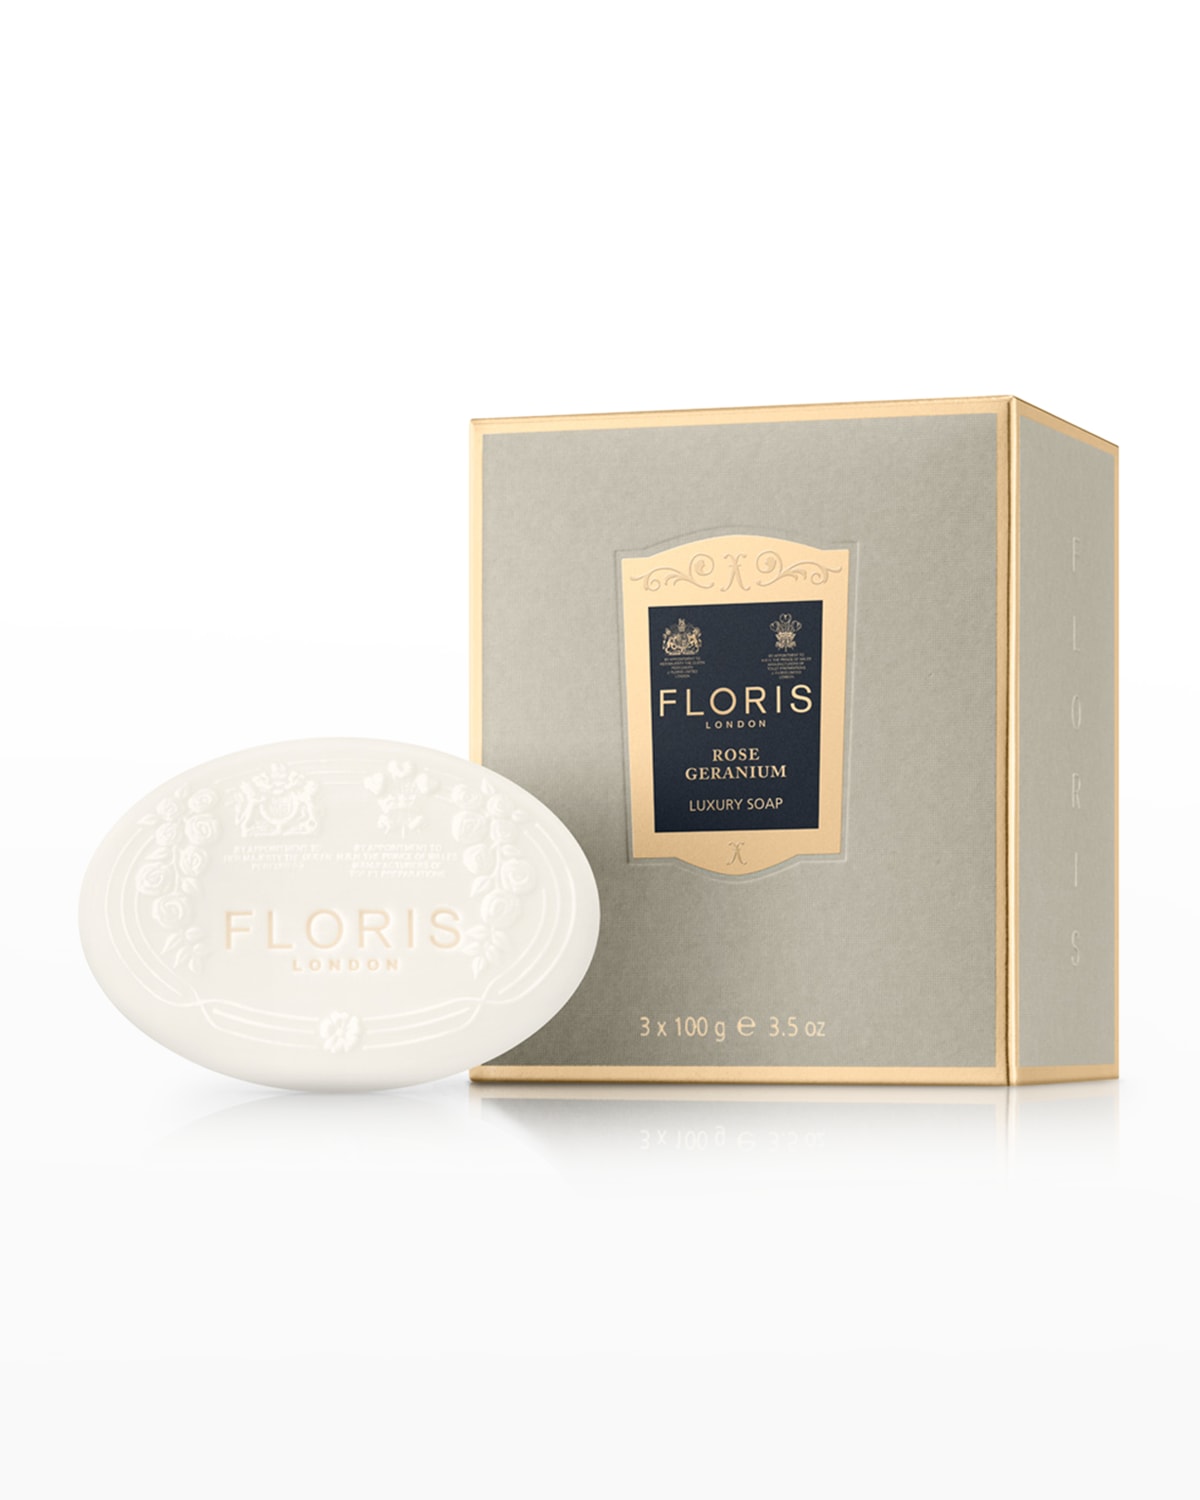 Floris London Rose Geranium Luxury Soap, 3 x 3.5 oz.